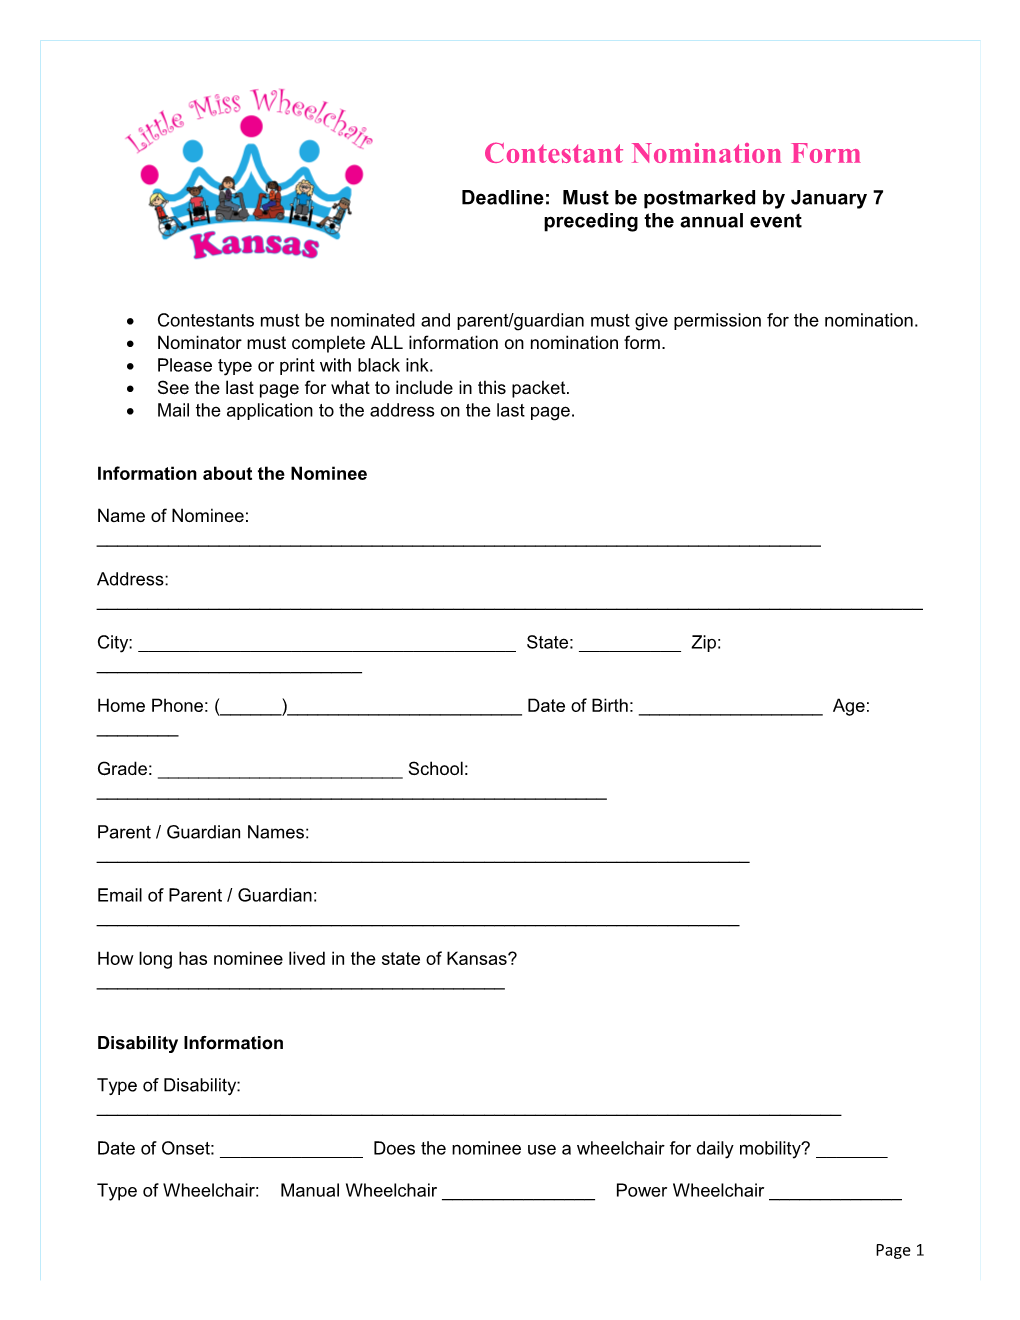 Contestant Nomination Form